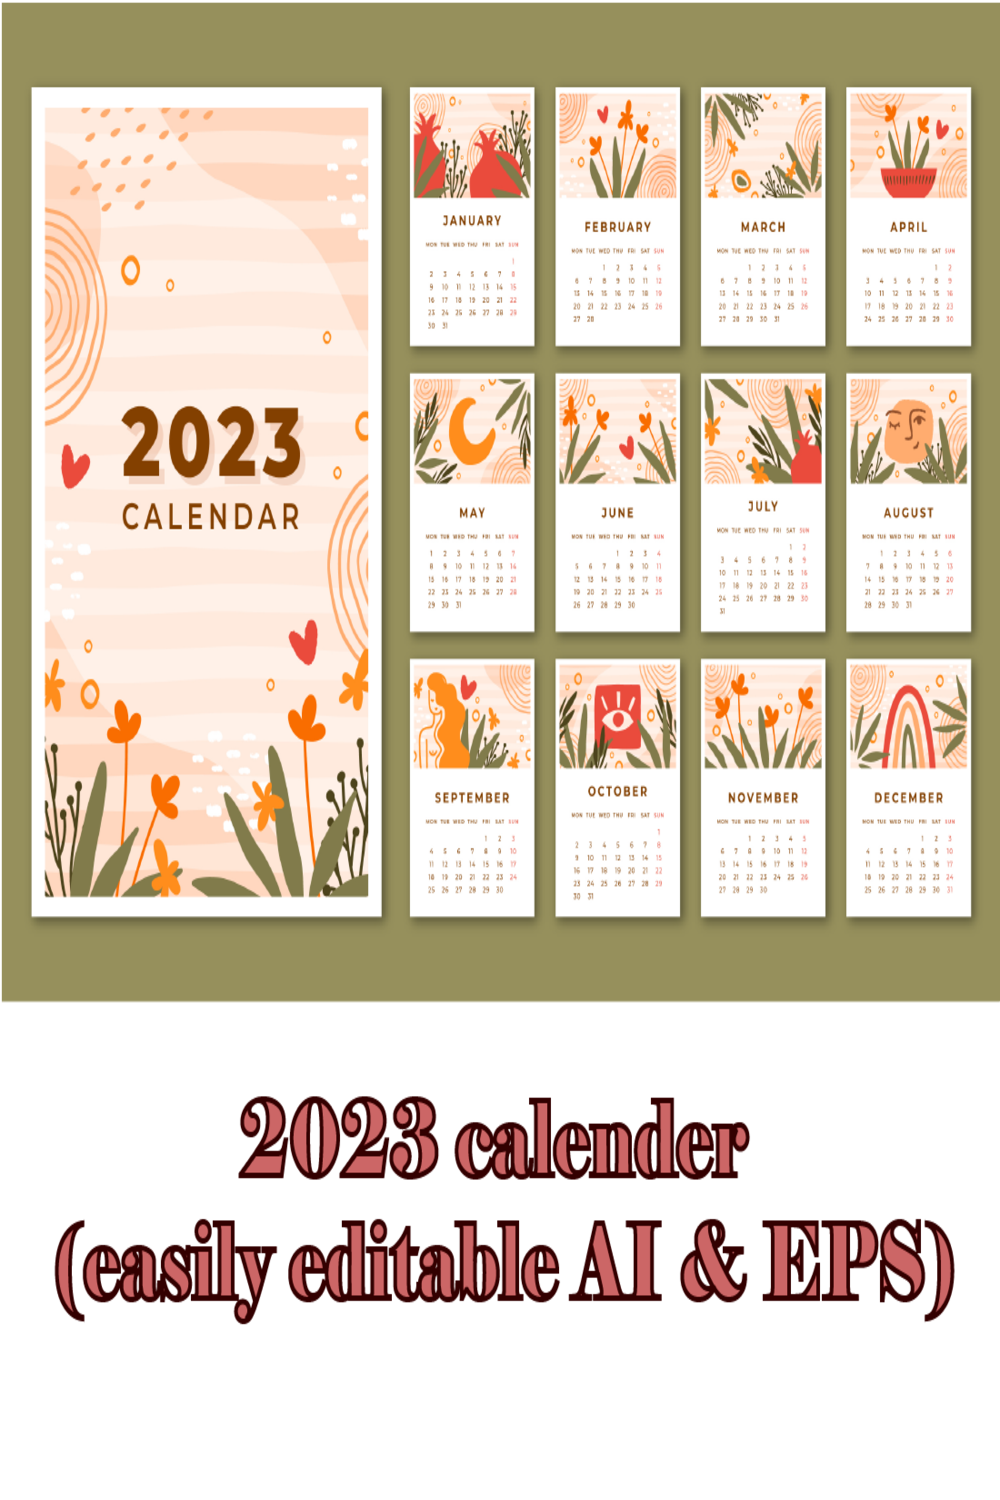 Floral Calendar Design Easily Editable pinterest image.